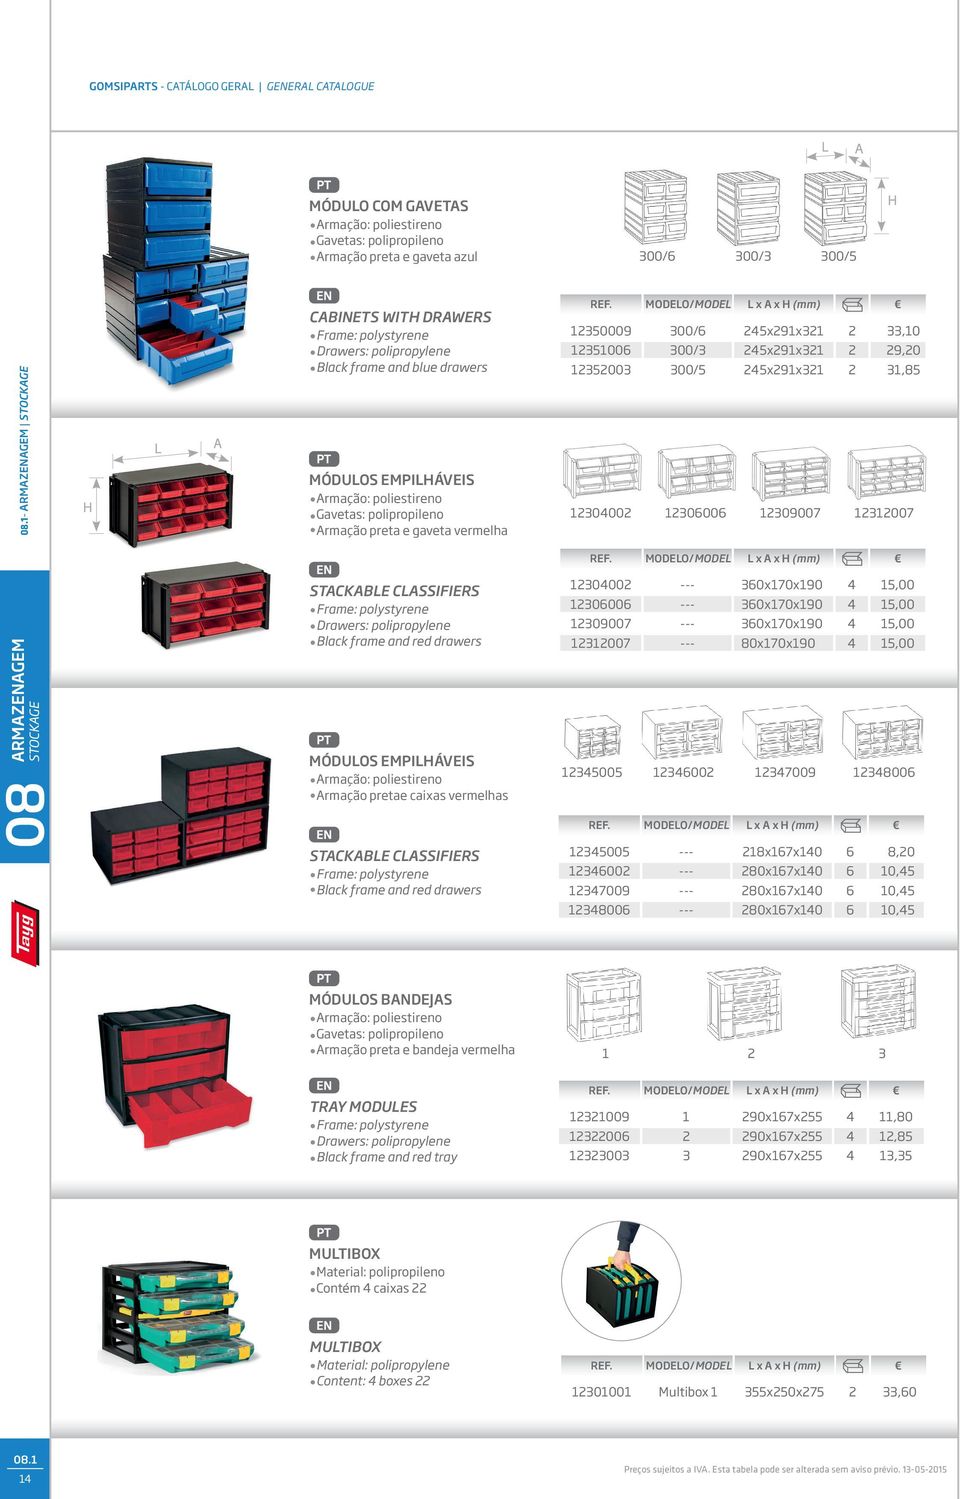 vermelha 20009 200 2200 00/ 00/ 00/ 2x29x2 2x29x2 2x29x2 2 2 2,0 29,20,8 20002 2000 209007 22007 STACKABLE CLASSIFIERS Frame: polystyrene Drawers: polipropylene Black frame and red drawers MÓDULOS